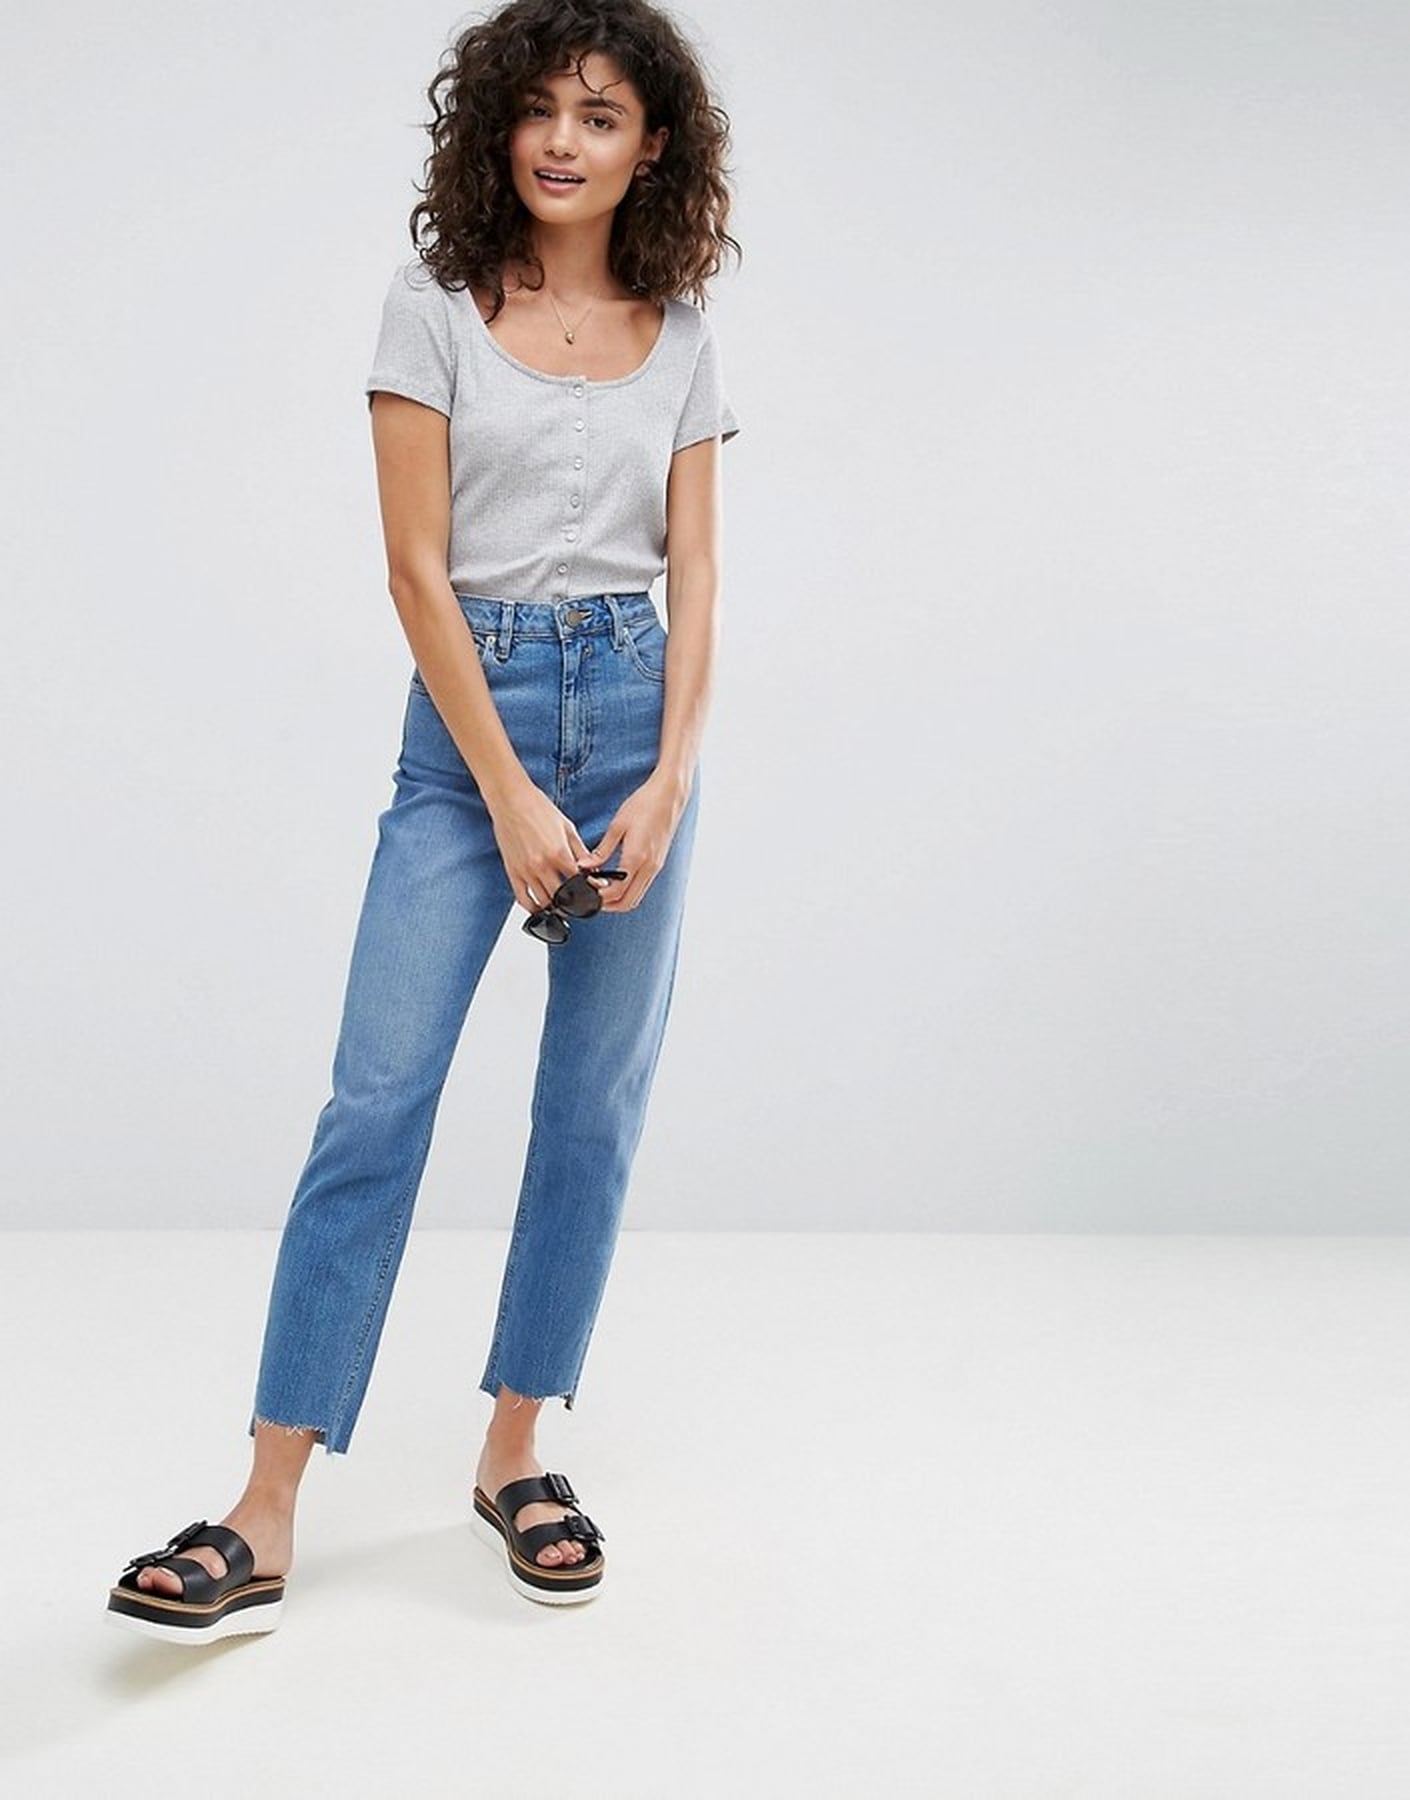 Kaia Gerber Wearing High-Waisted Jeans | POPSUGAR Fashion